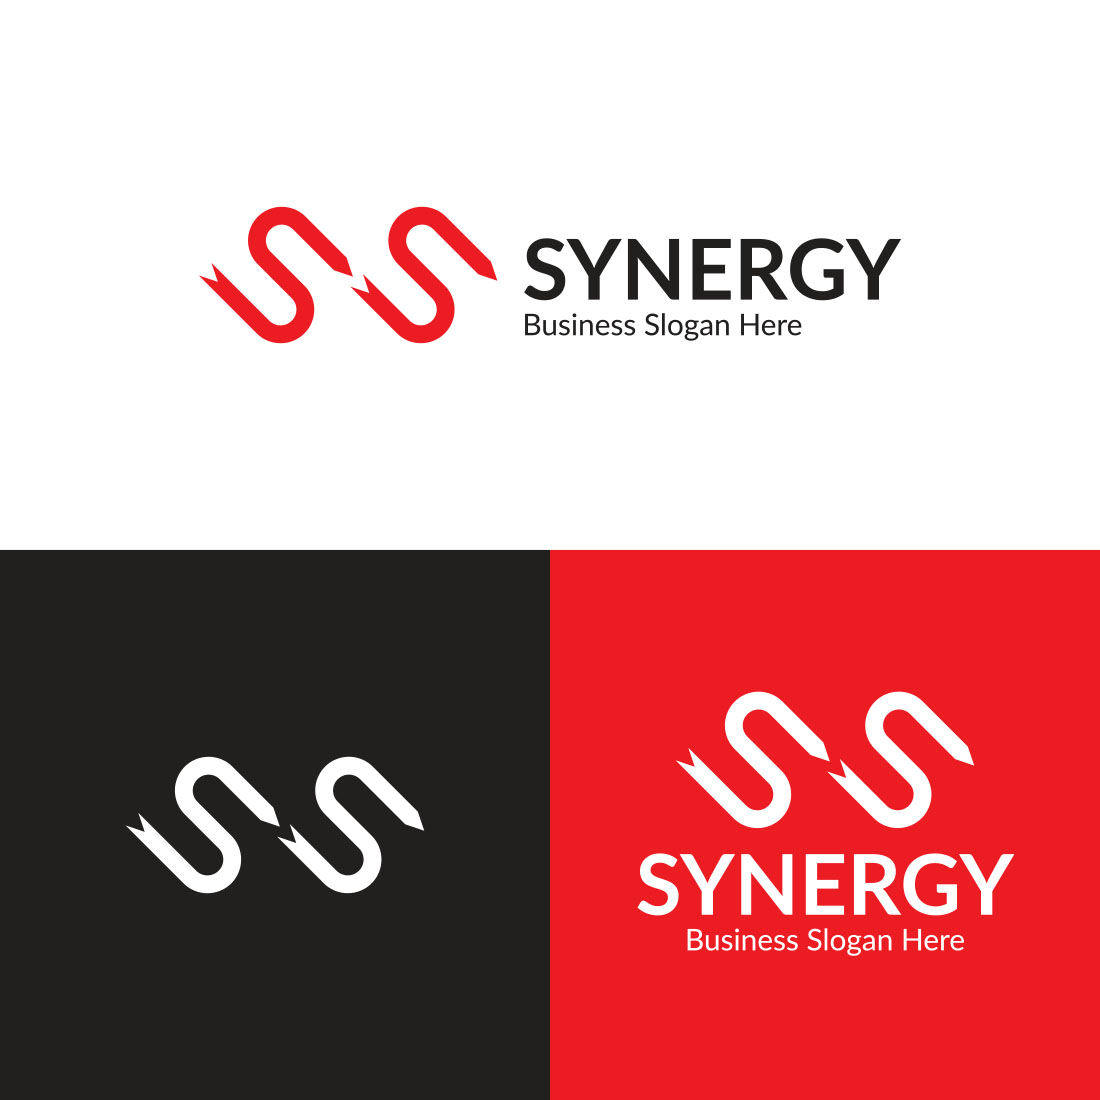 Chain Letter SS Logo Design cover image.